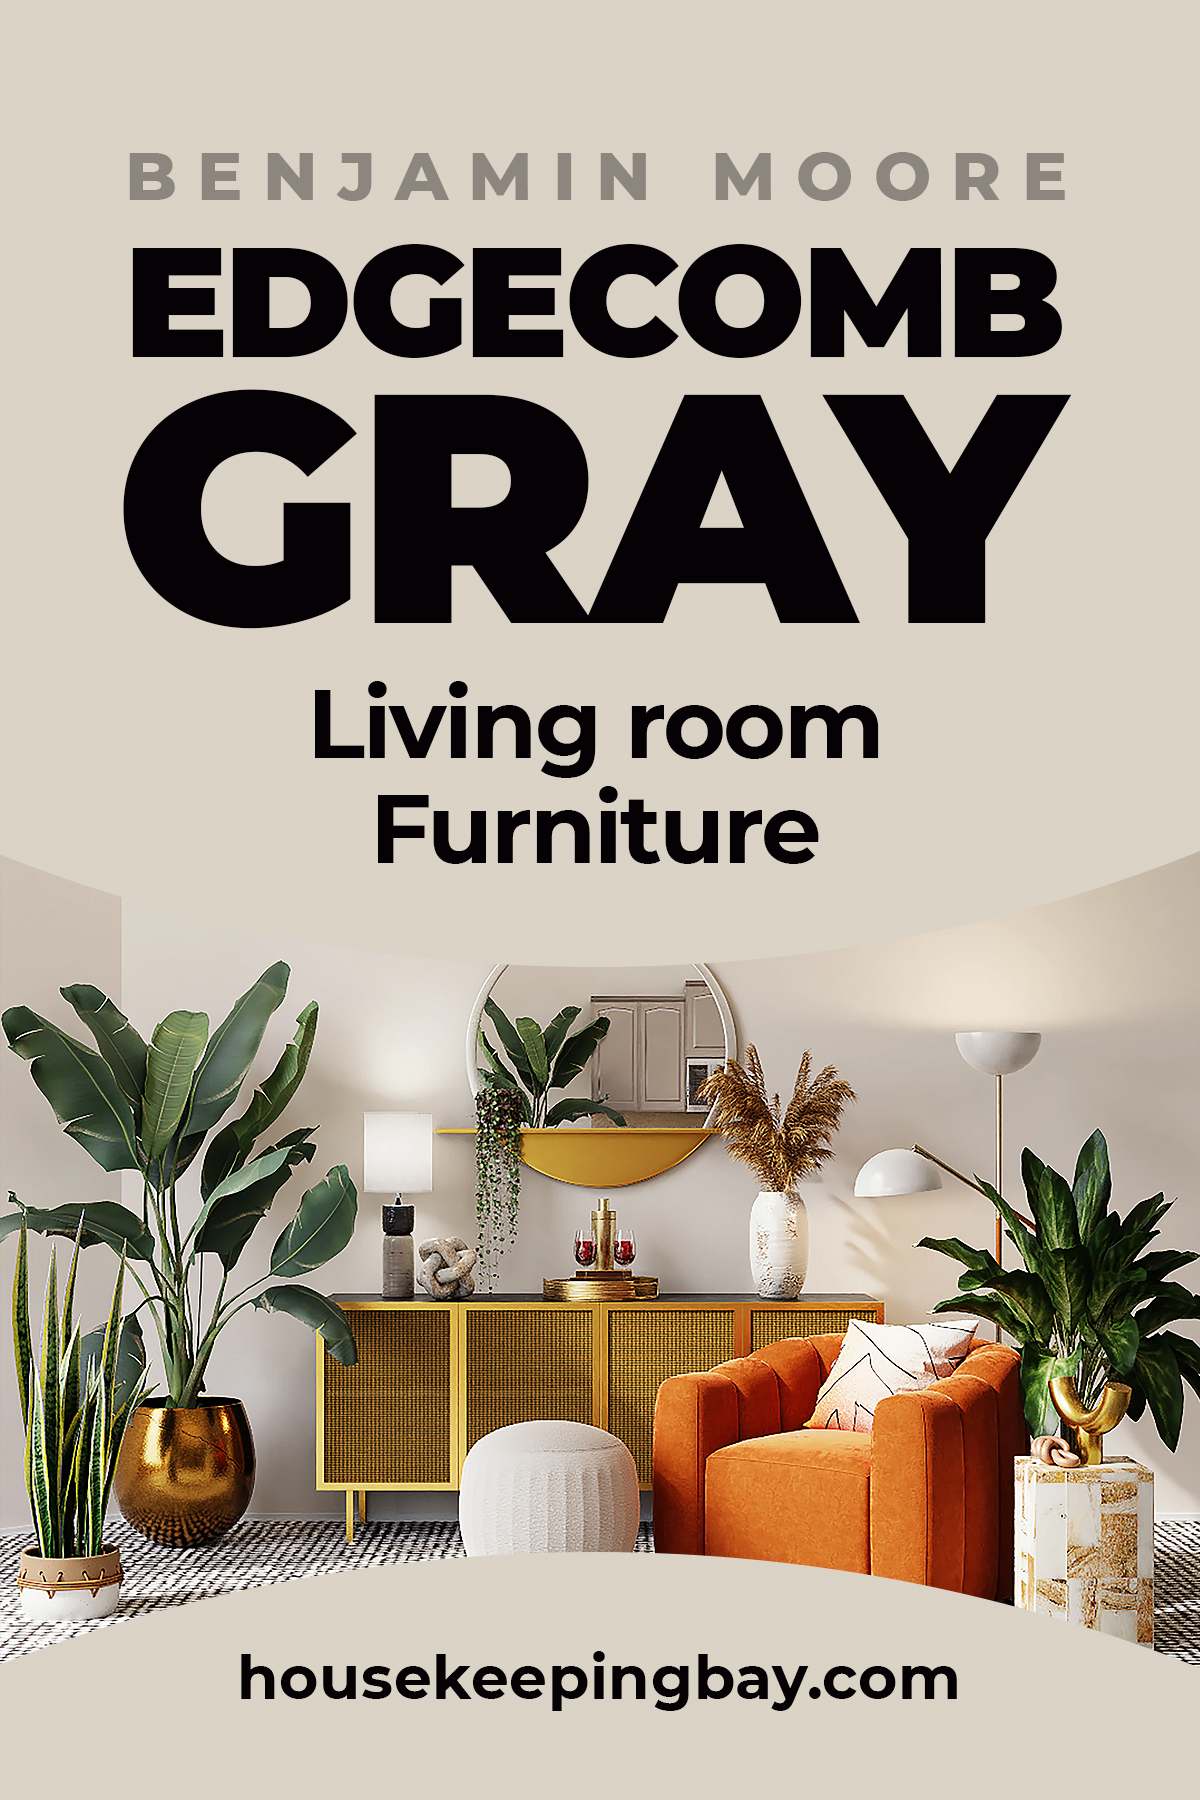 Edgecomb Gray living room Furniture